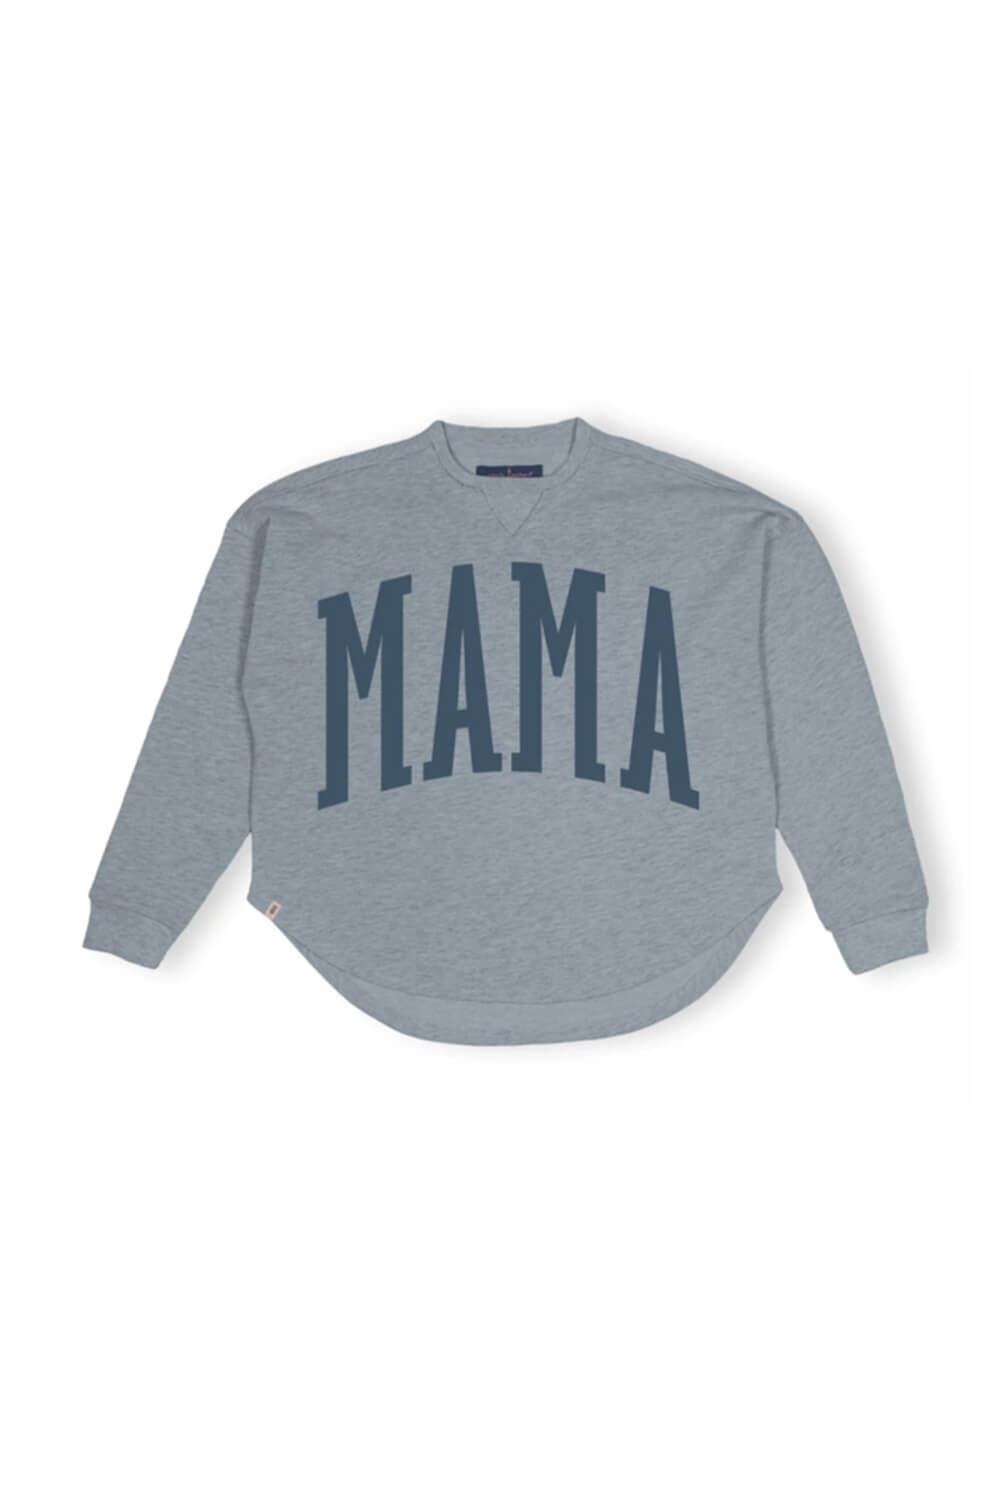 Women's Simply Southern Mama Crewneck Sweater